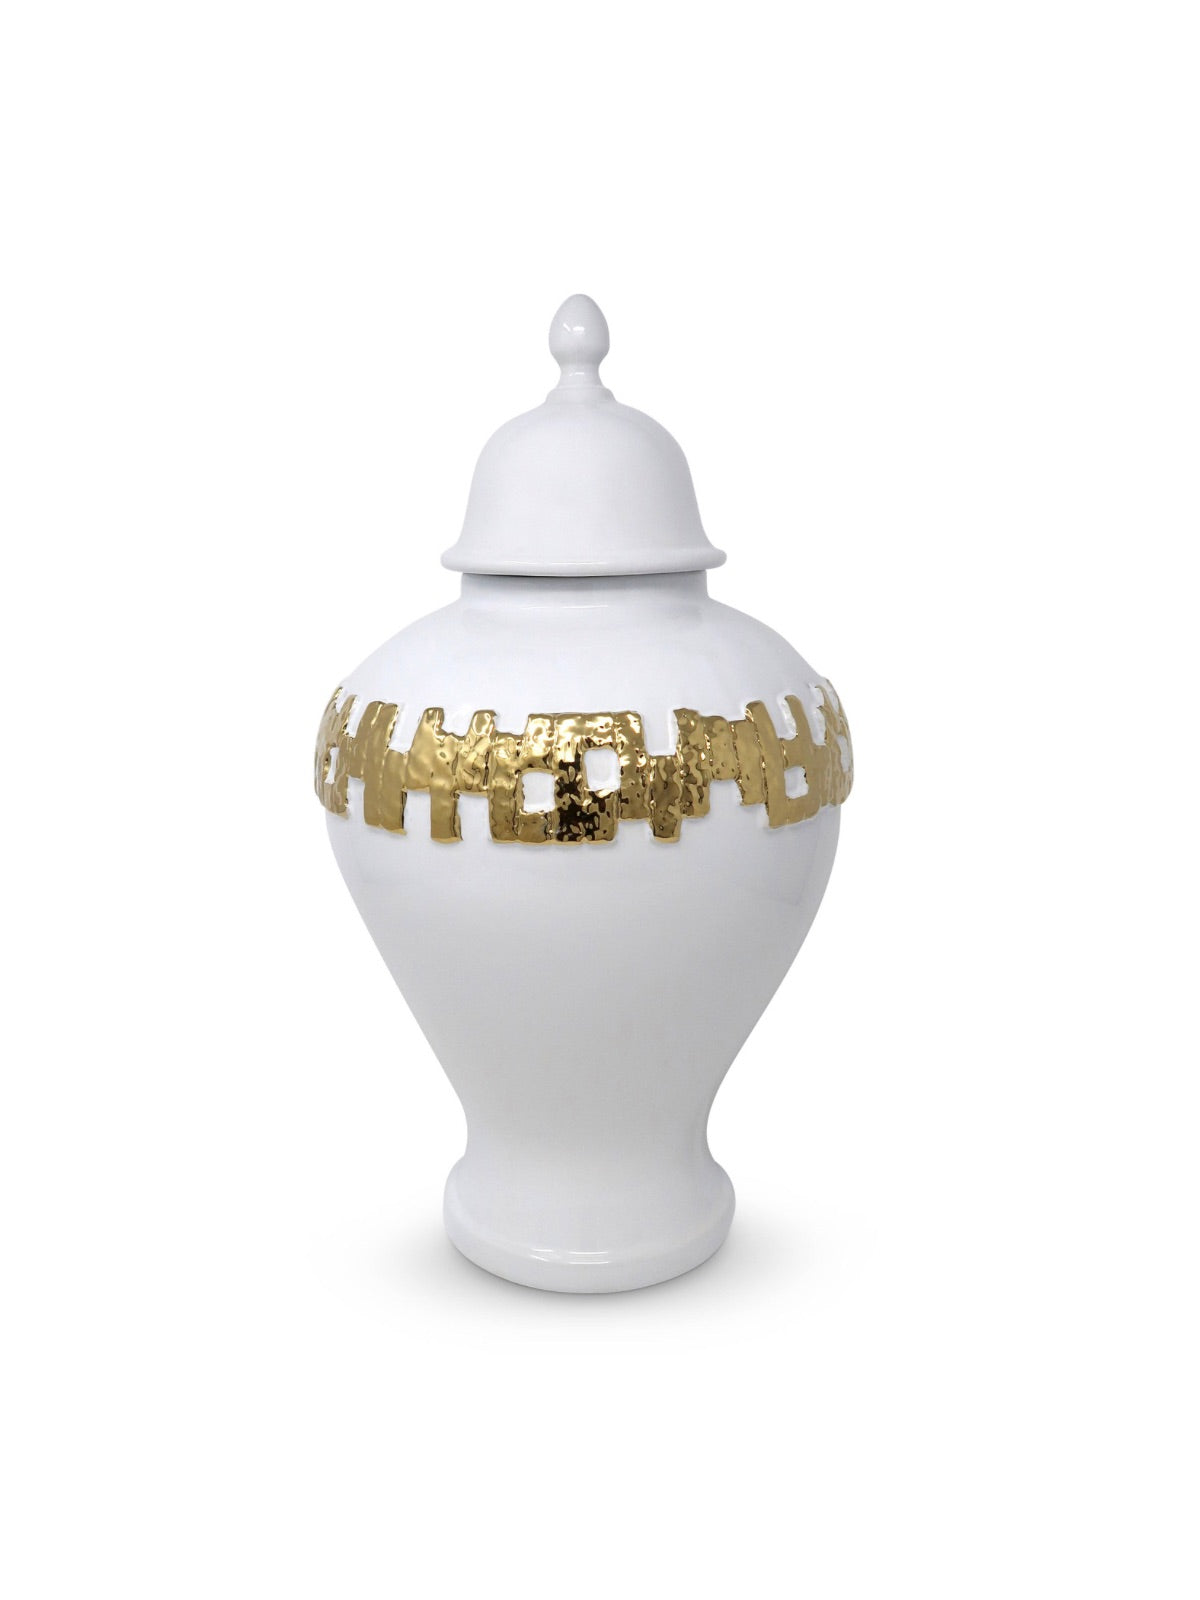 White Ceramic Ginger Jar with Gold Link Design, Medium Size Sold by KYA Home Decor.